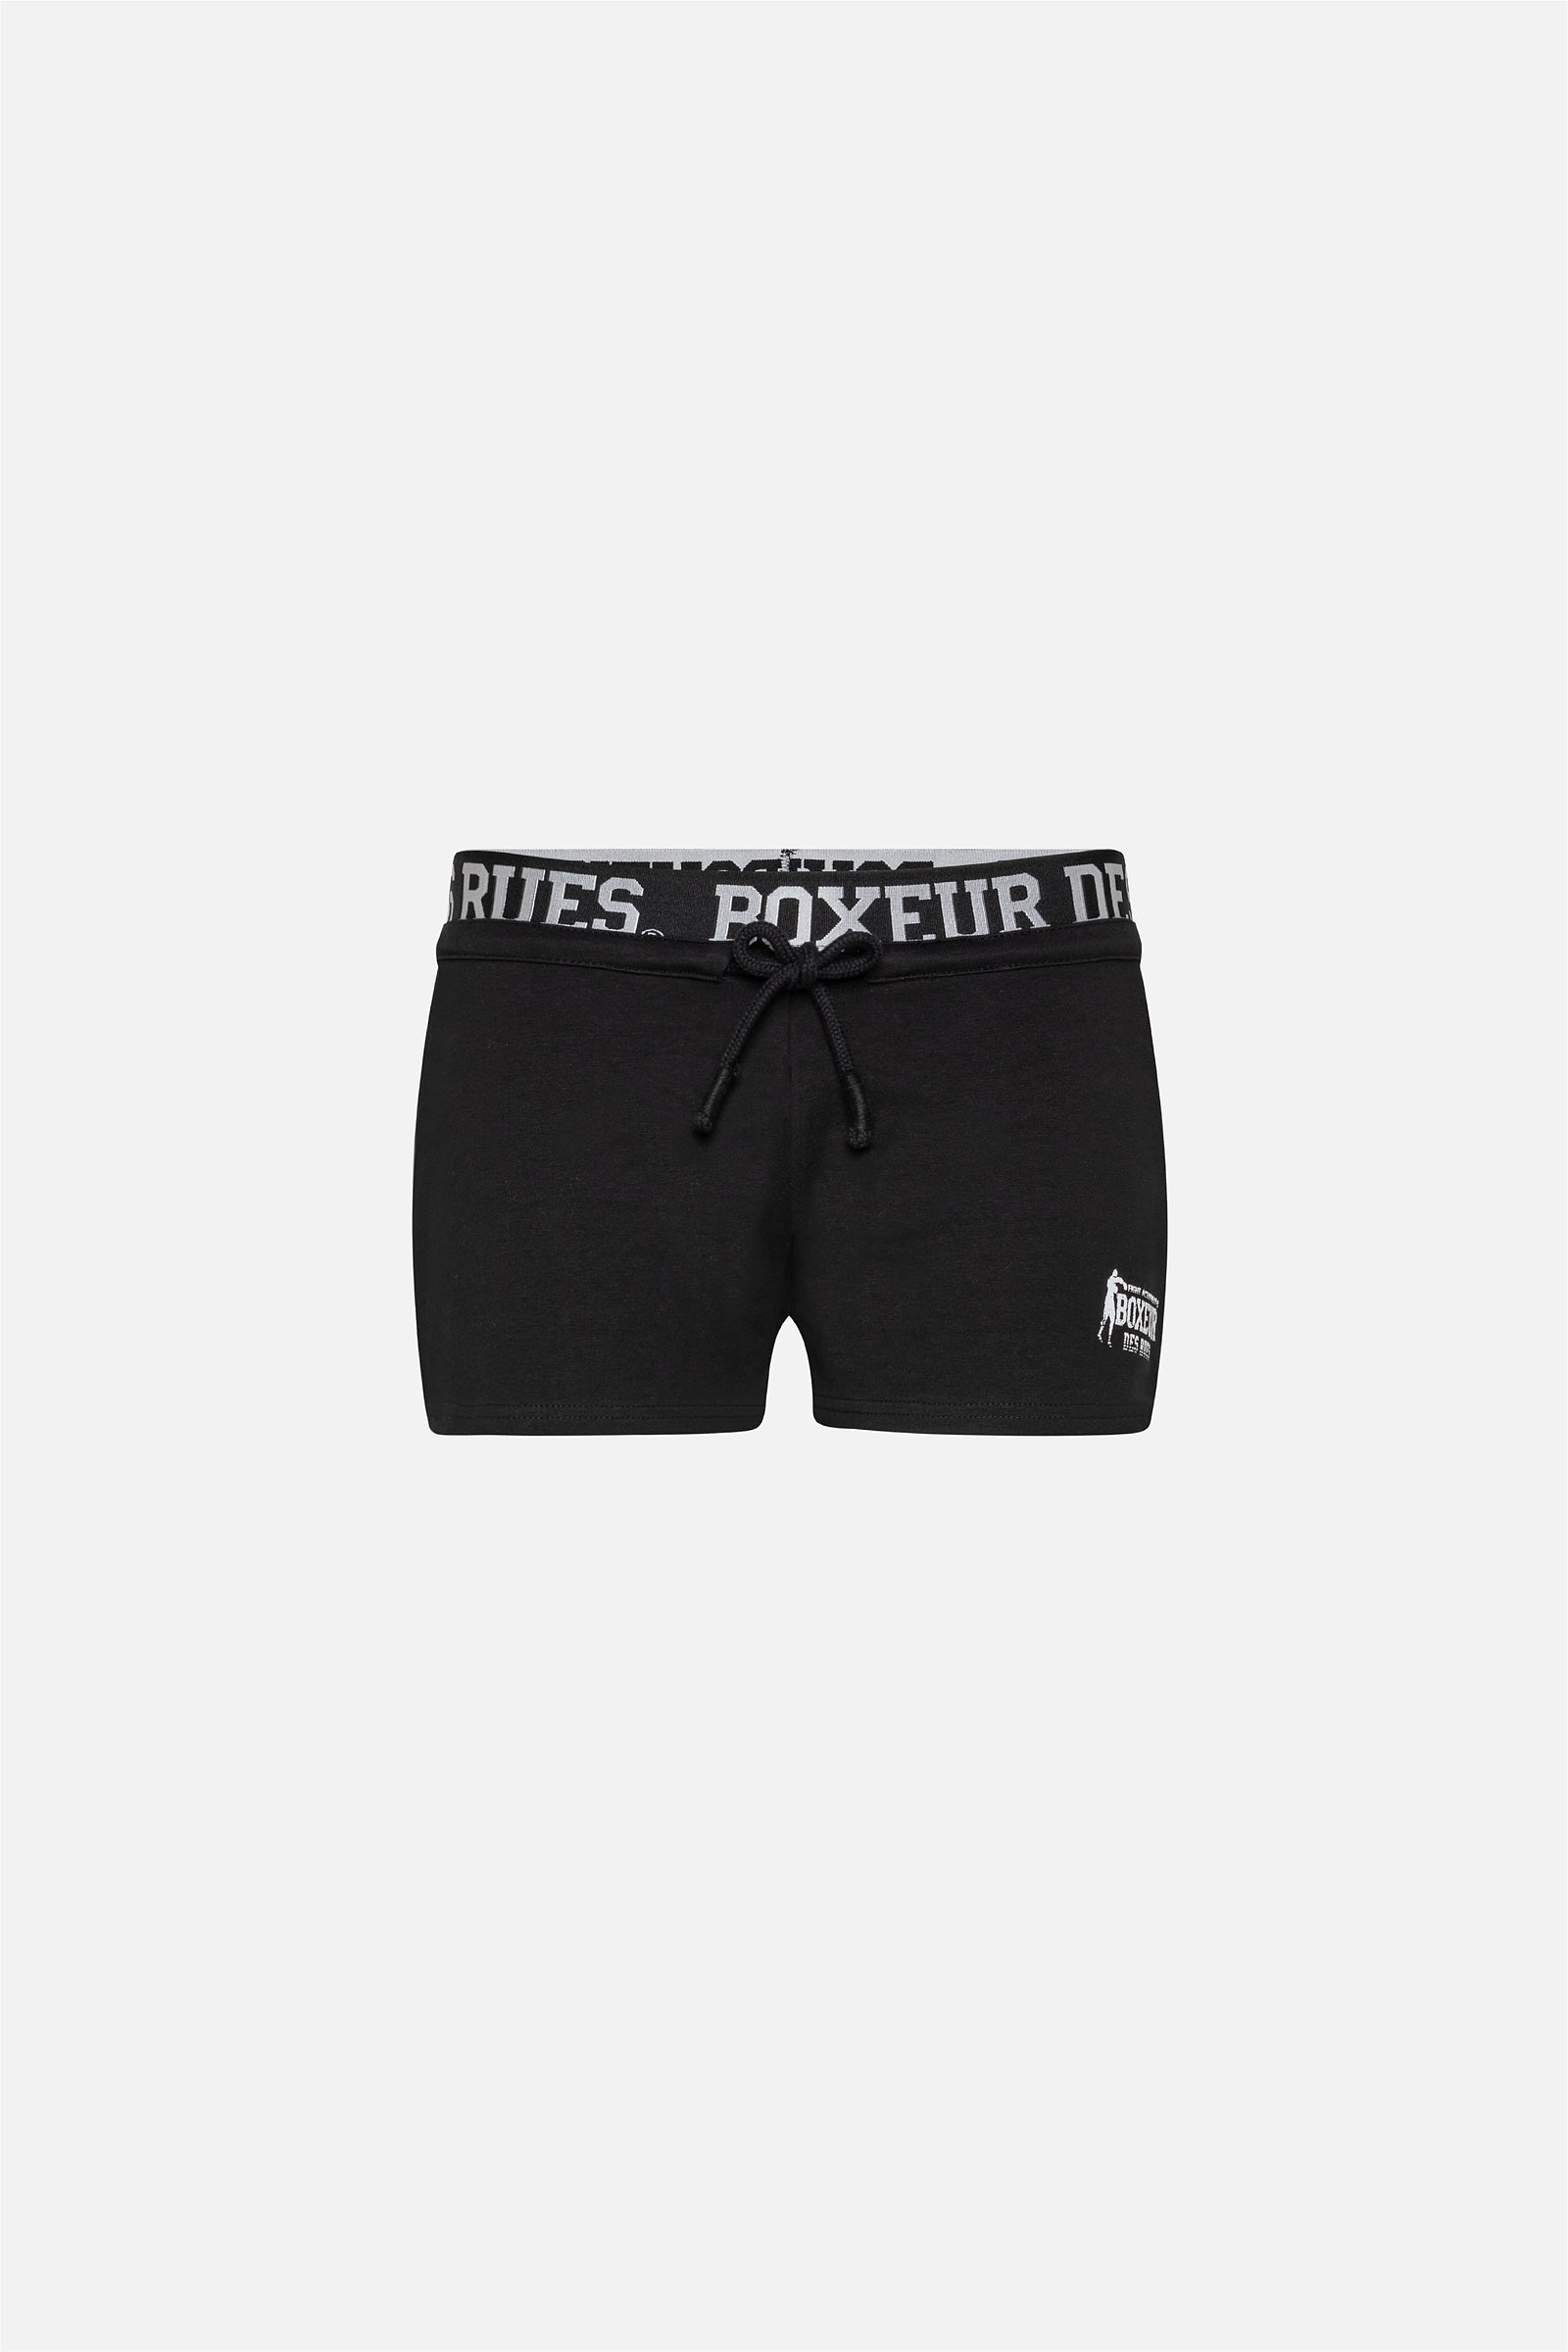 Curved Hem Essential Shorts in Black Shorts Boxeur des Rues   